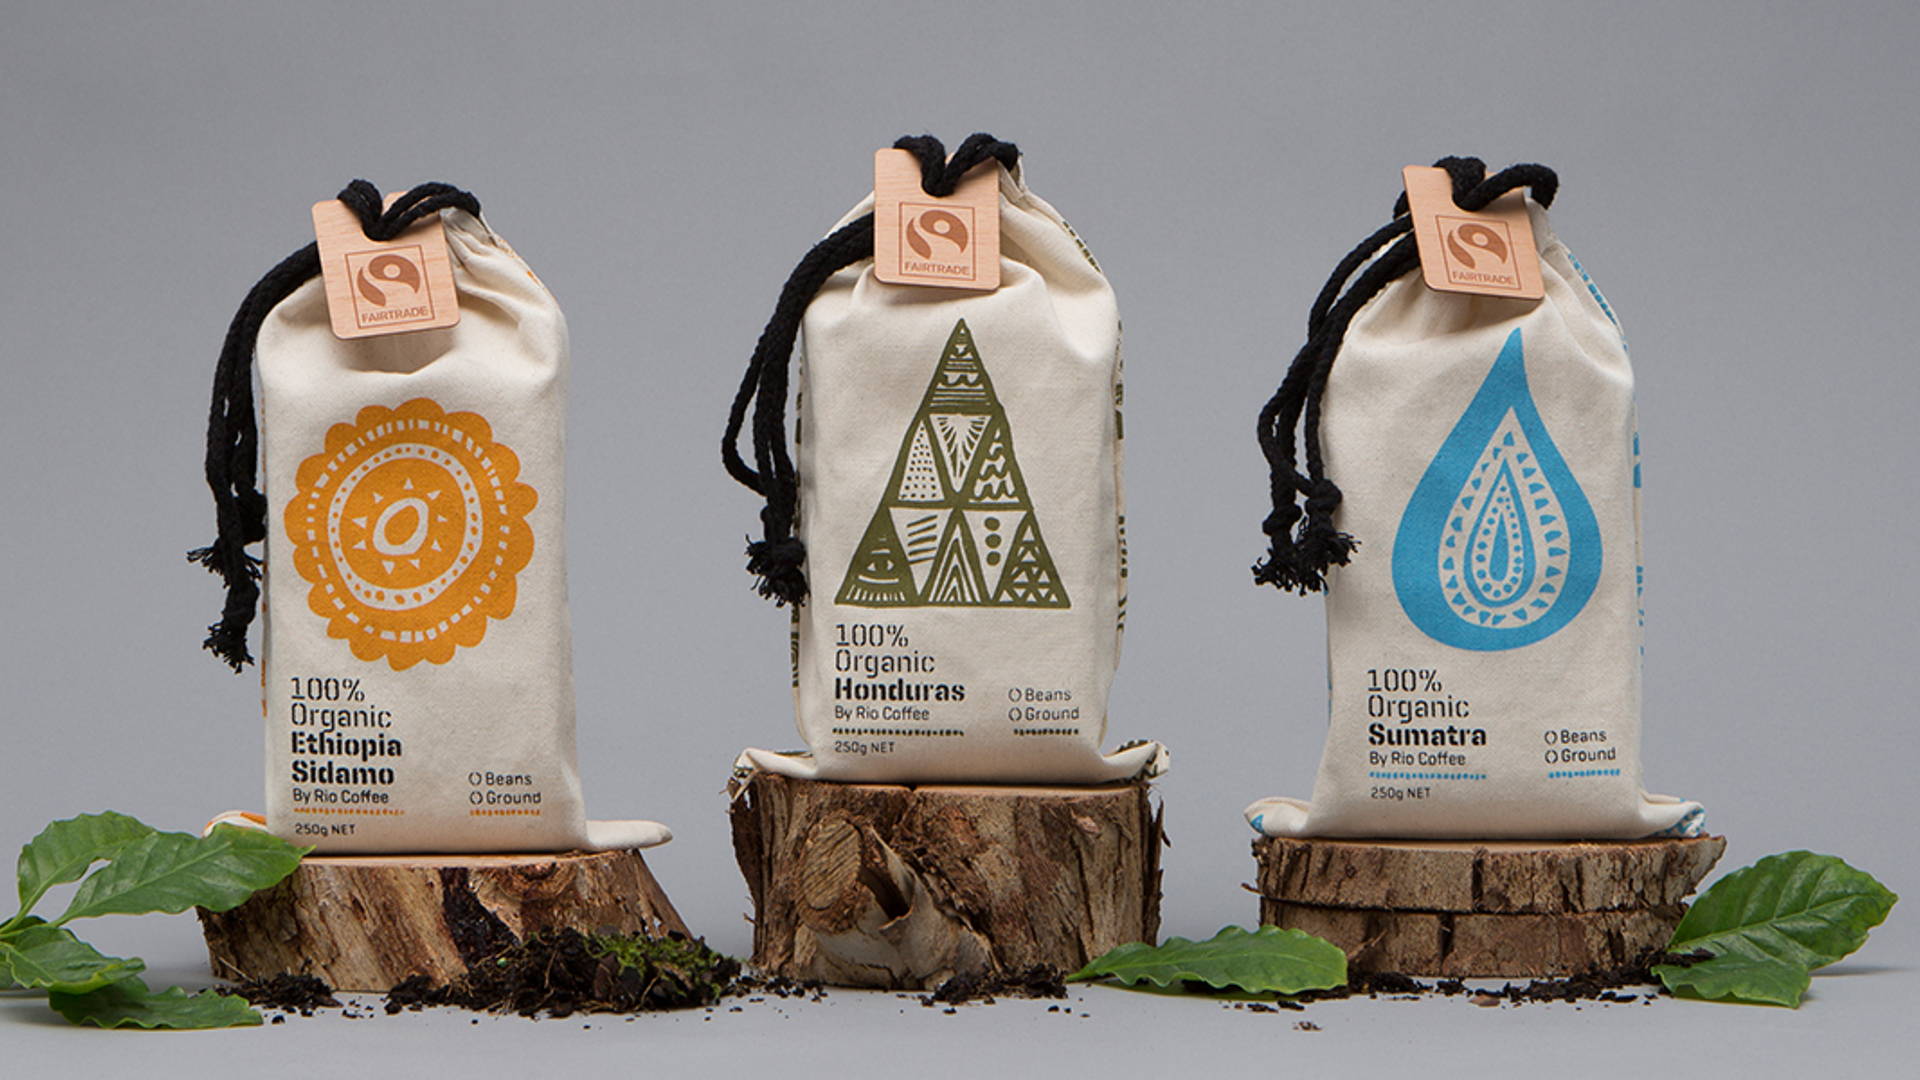 Featured image for Rio Coffee Fairtrade Coffee Range